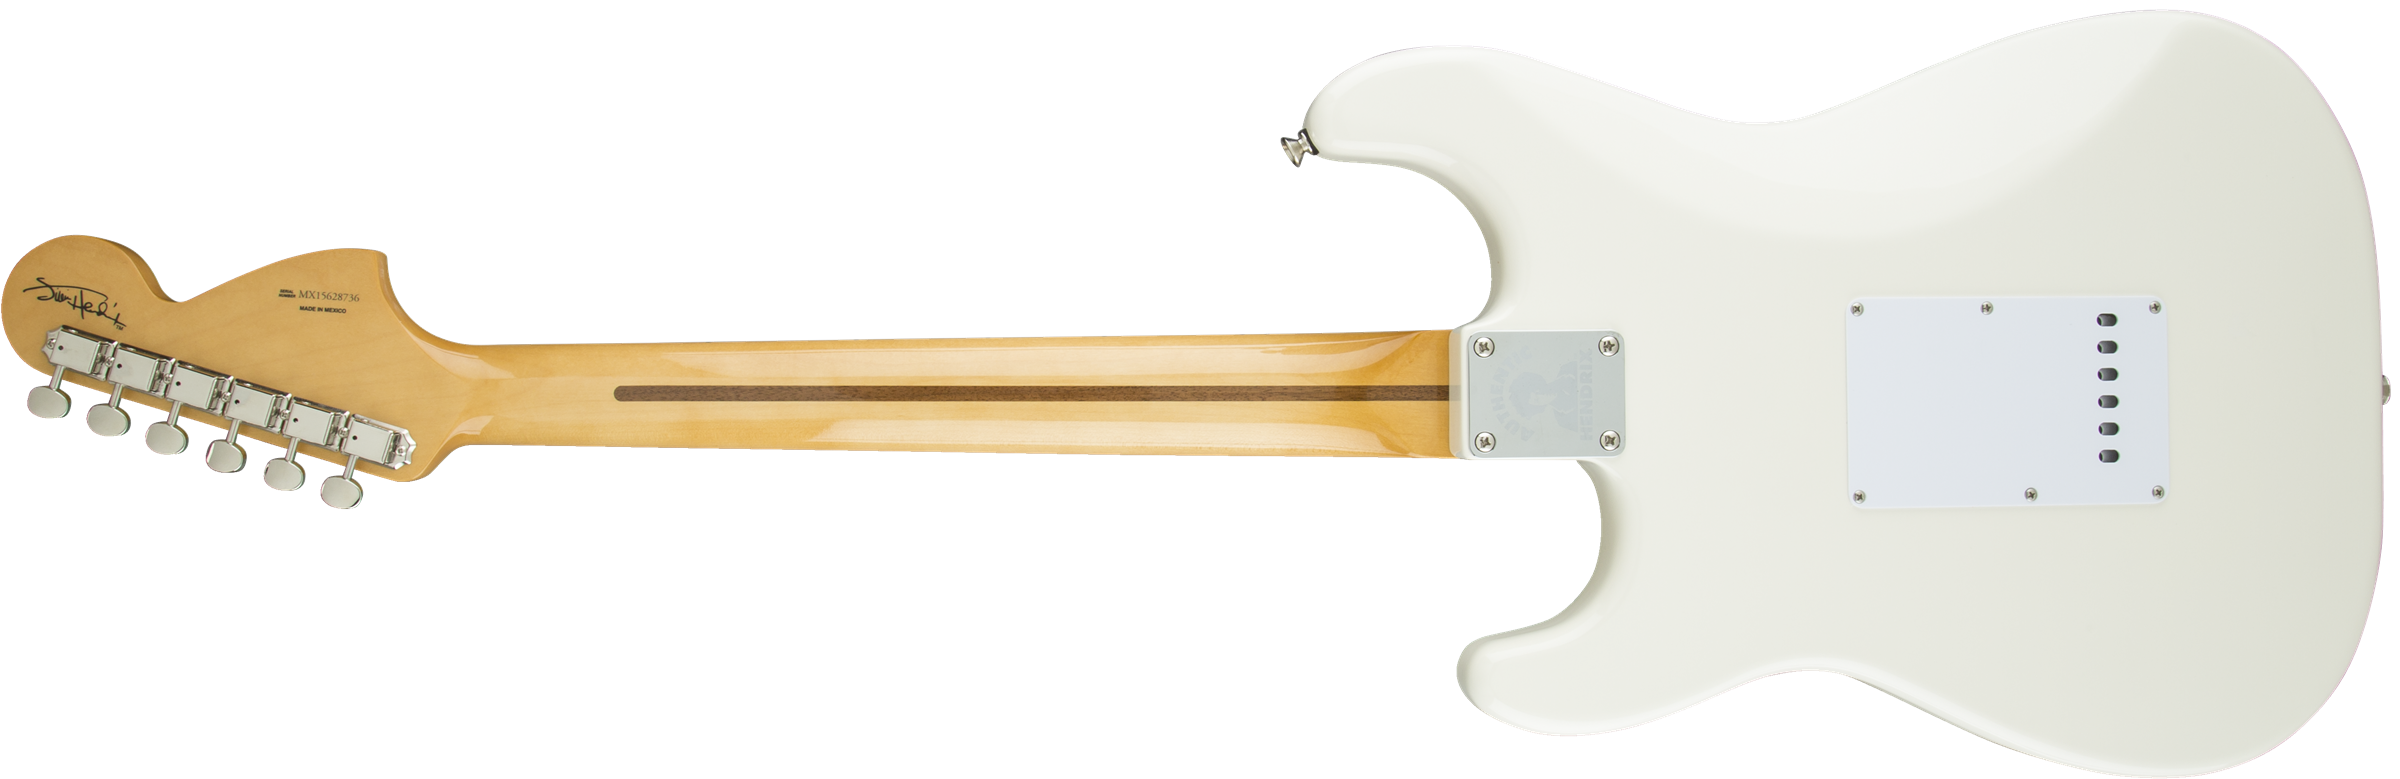 Fender Jimi Hendrix Stratocaster (mex, Mn) - Olympic White - Guitarra eléctrica con forma de str. - Variation 1